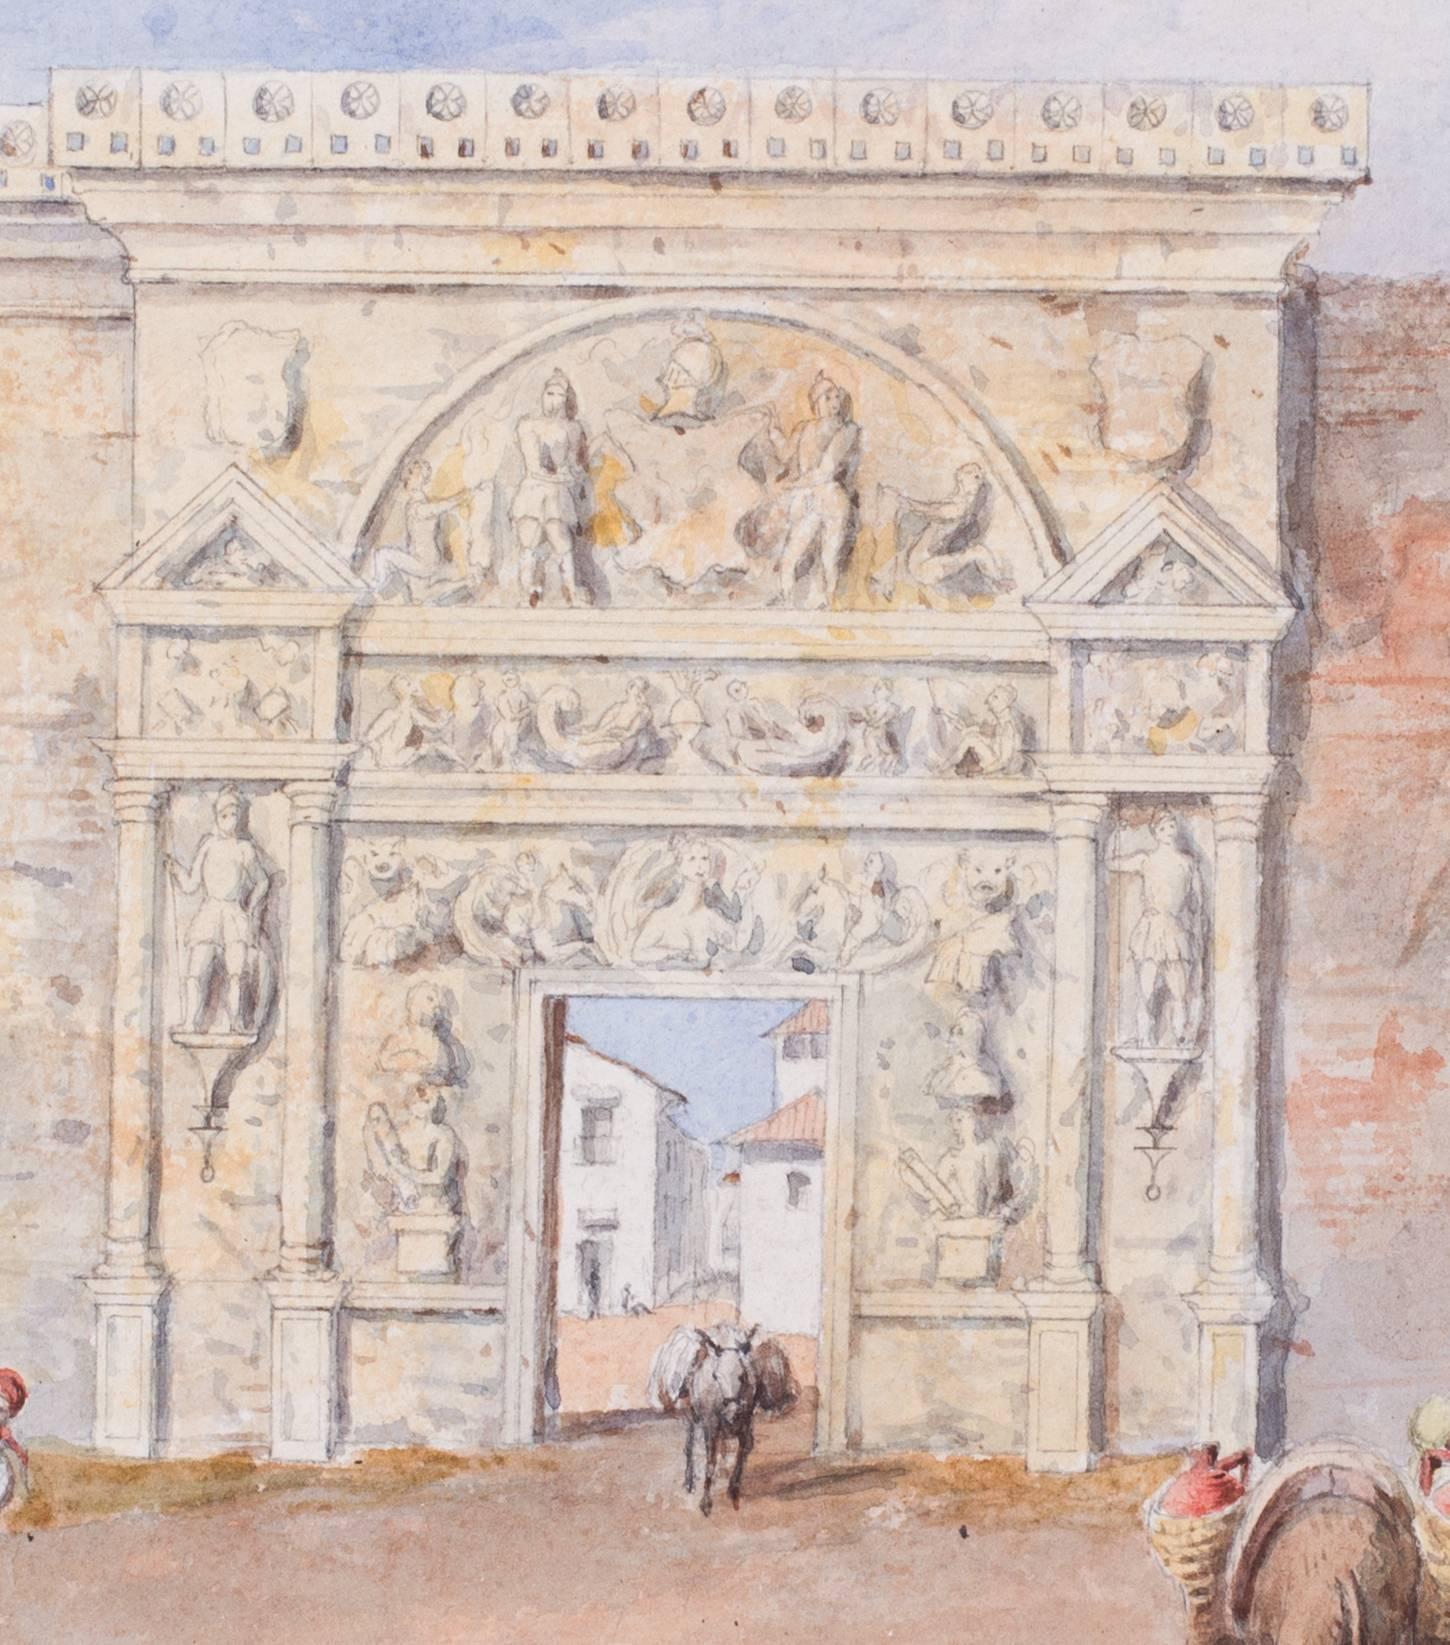 Puerta Romana, Cordova, Spain, 1836 - Gray Landscape Art by George Dennis